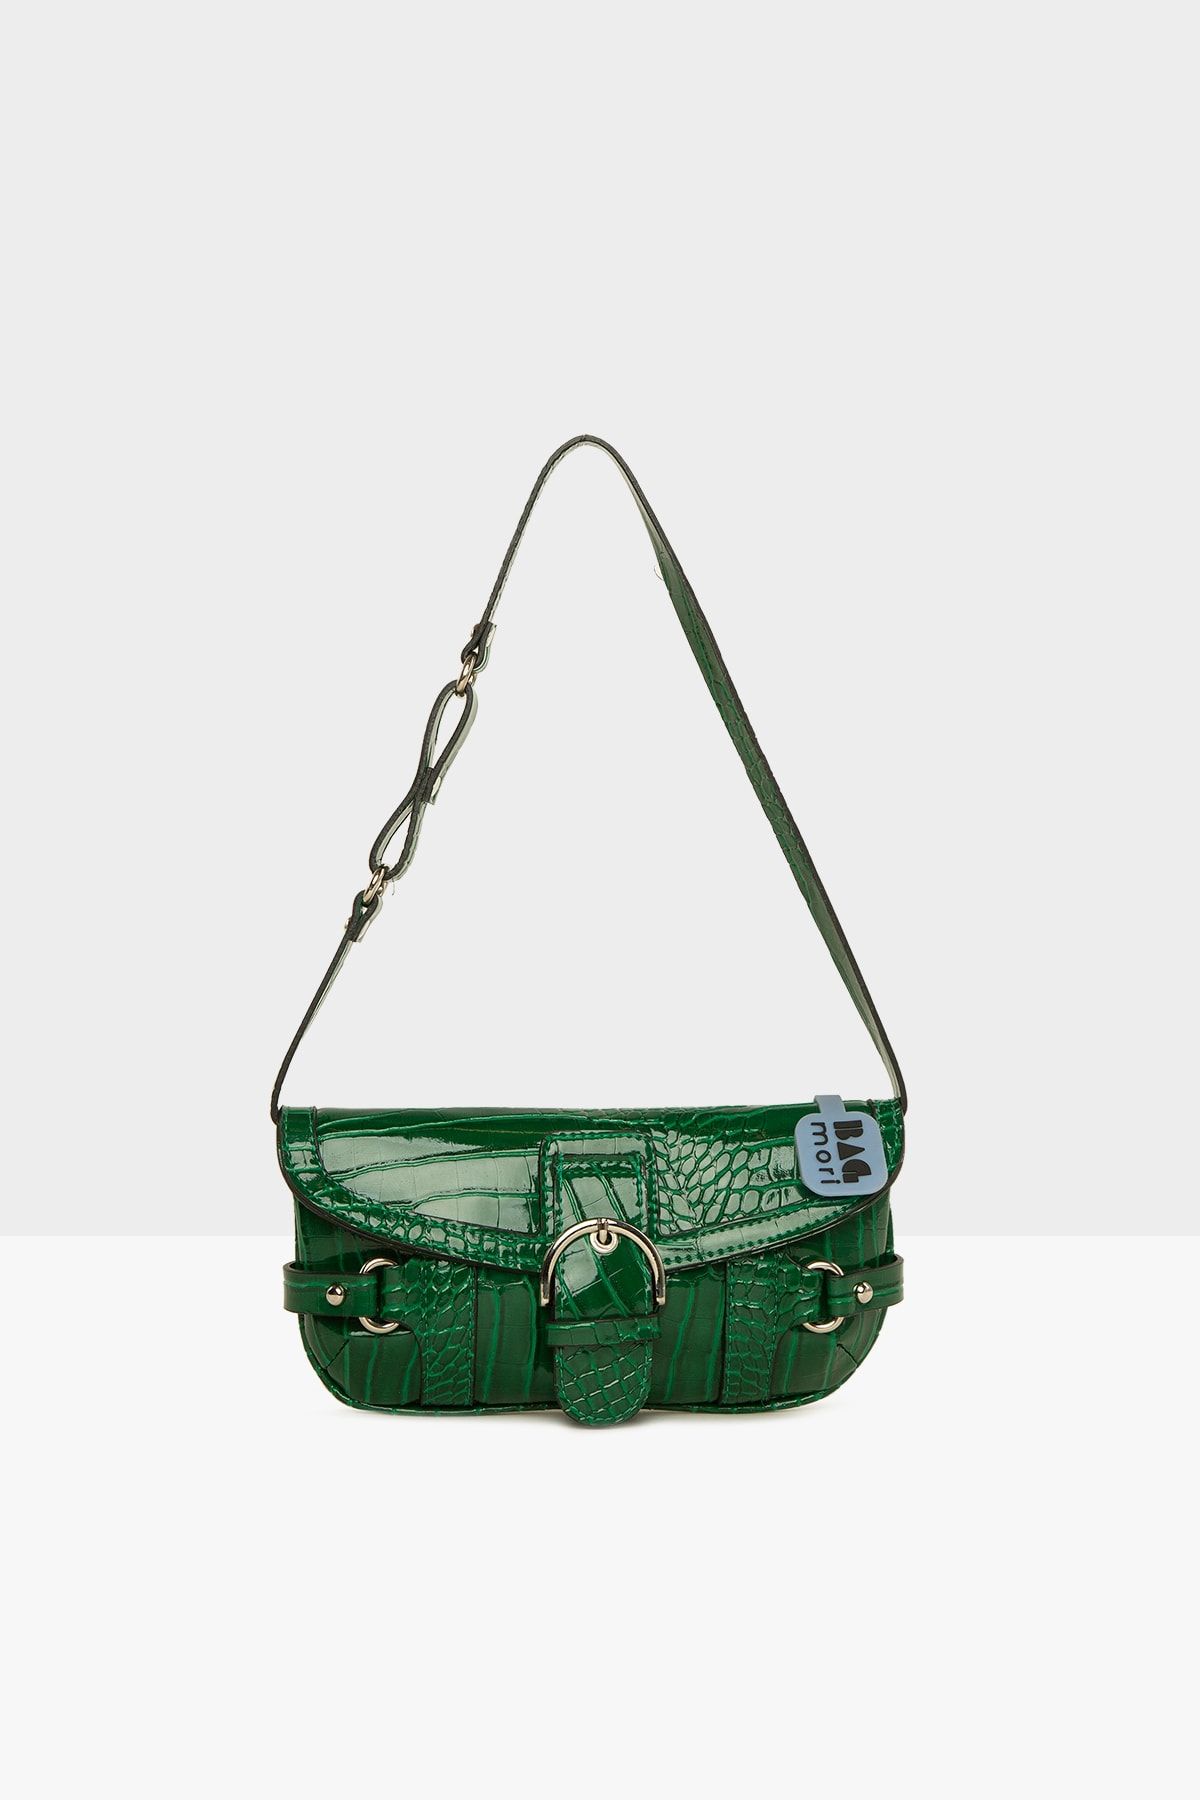 DOLCE & GABBANA Snakeskin Small Shoulder Bag Green 276270